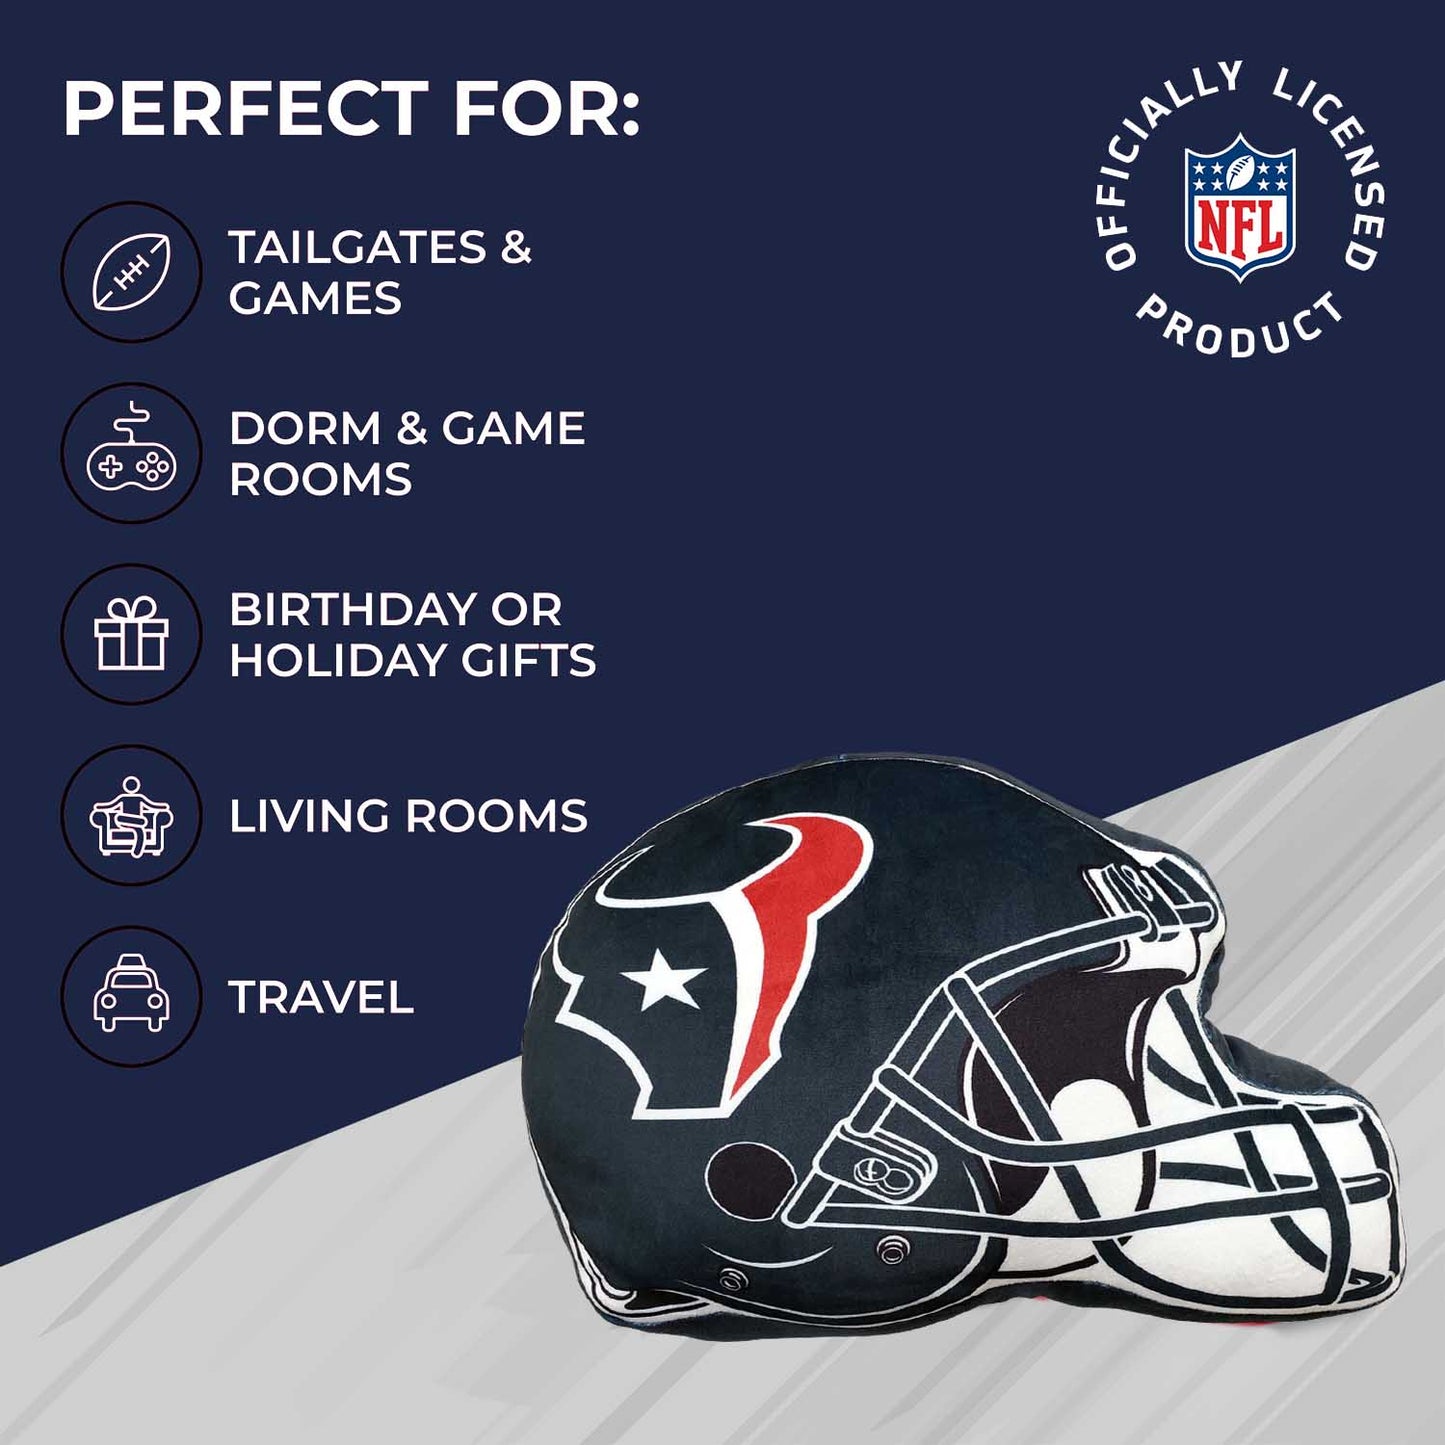 Houston Texans NFL Helmet Football Super Soft Plush Pillow - Navy